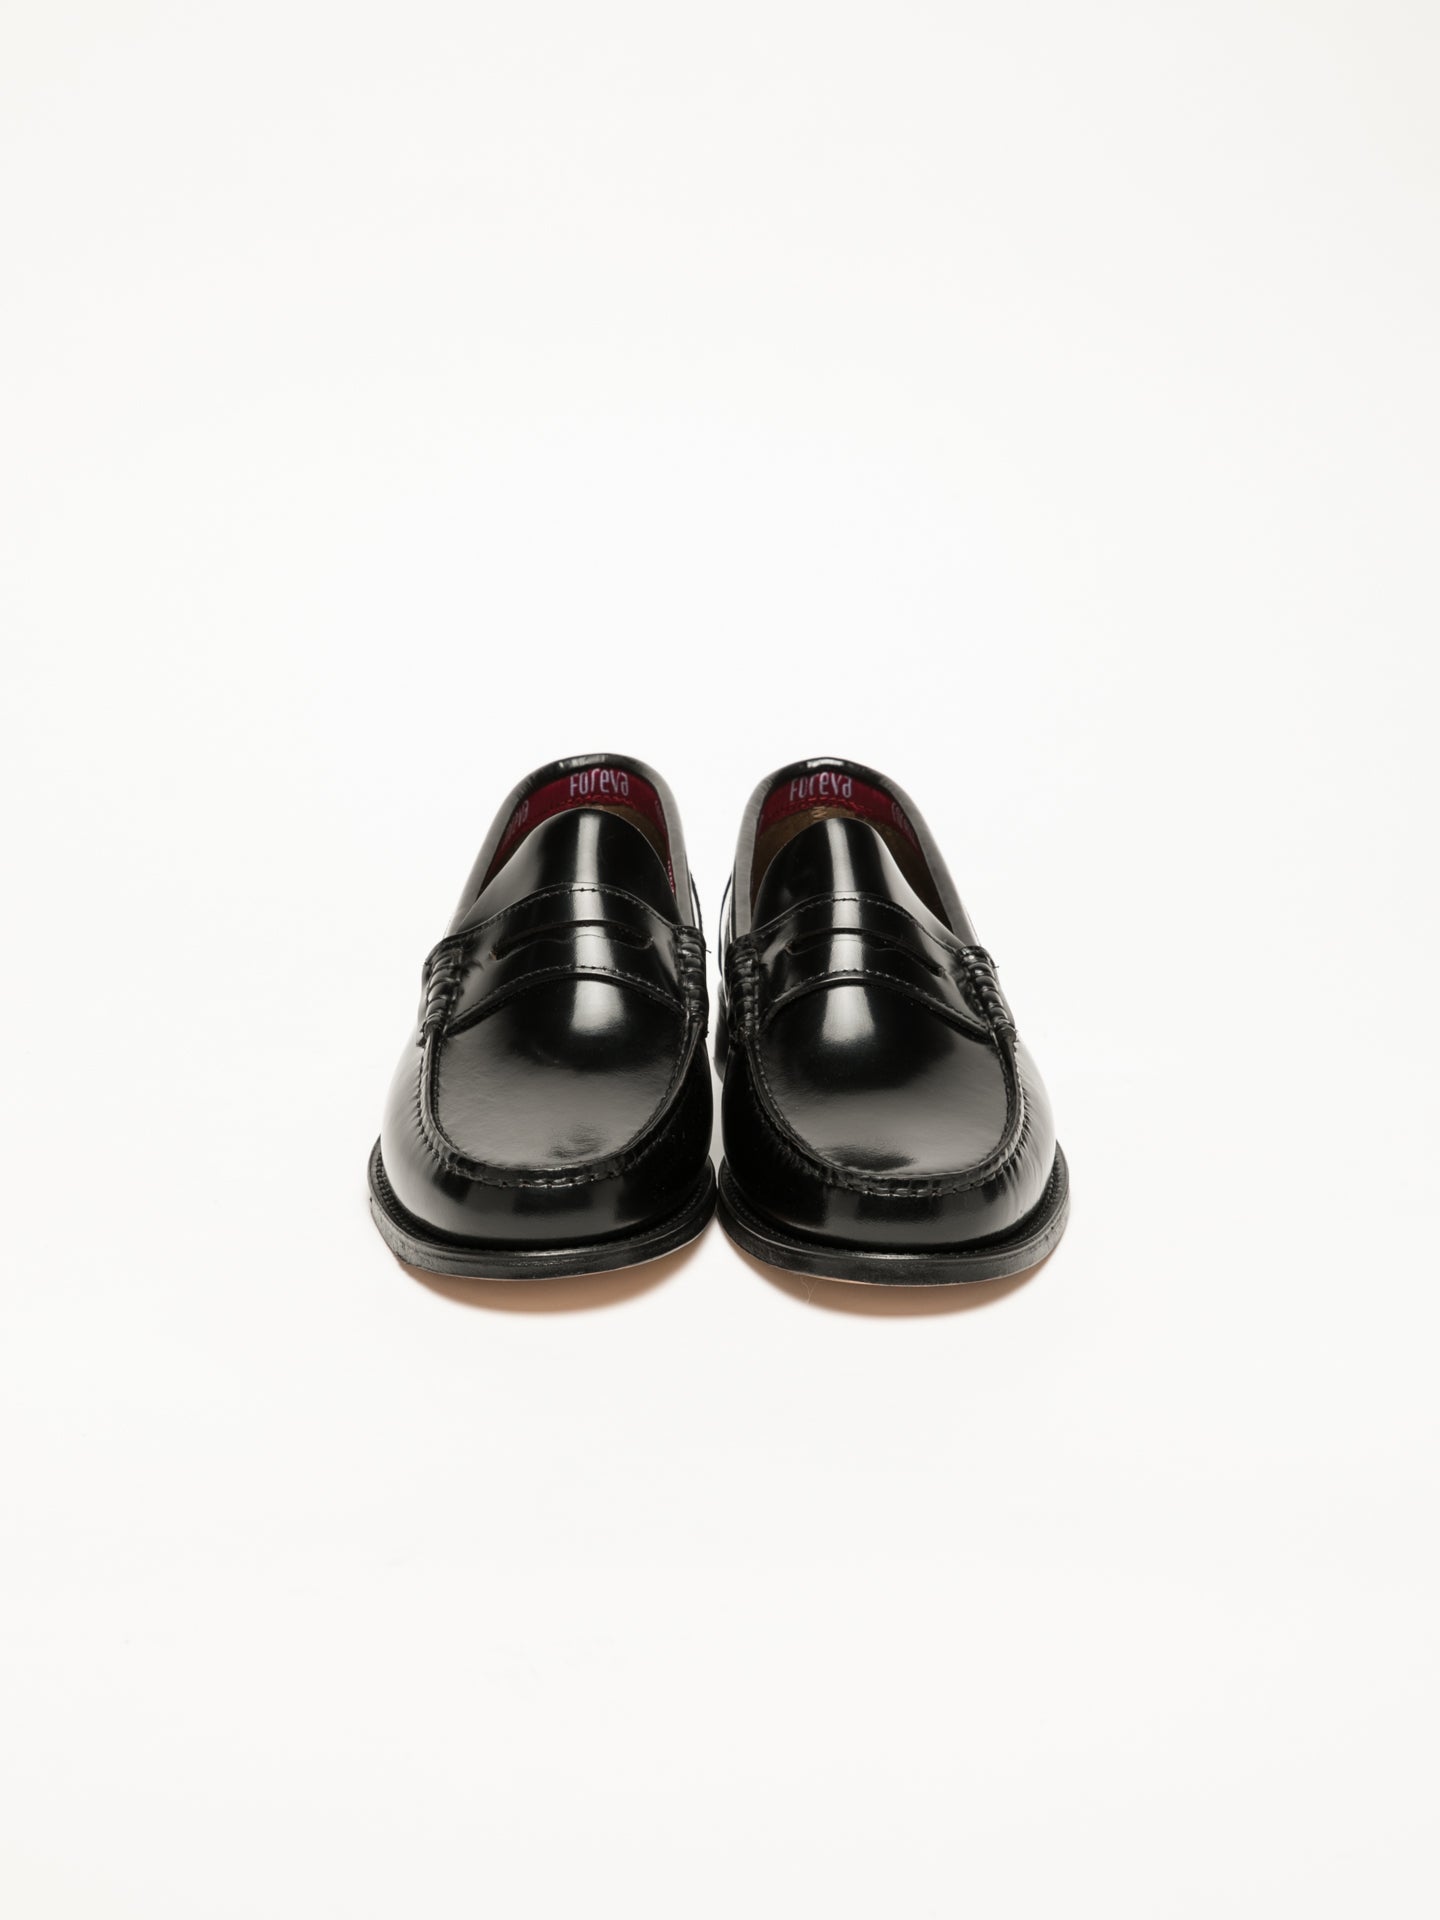 Foreva Black Mocassins Shoes